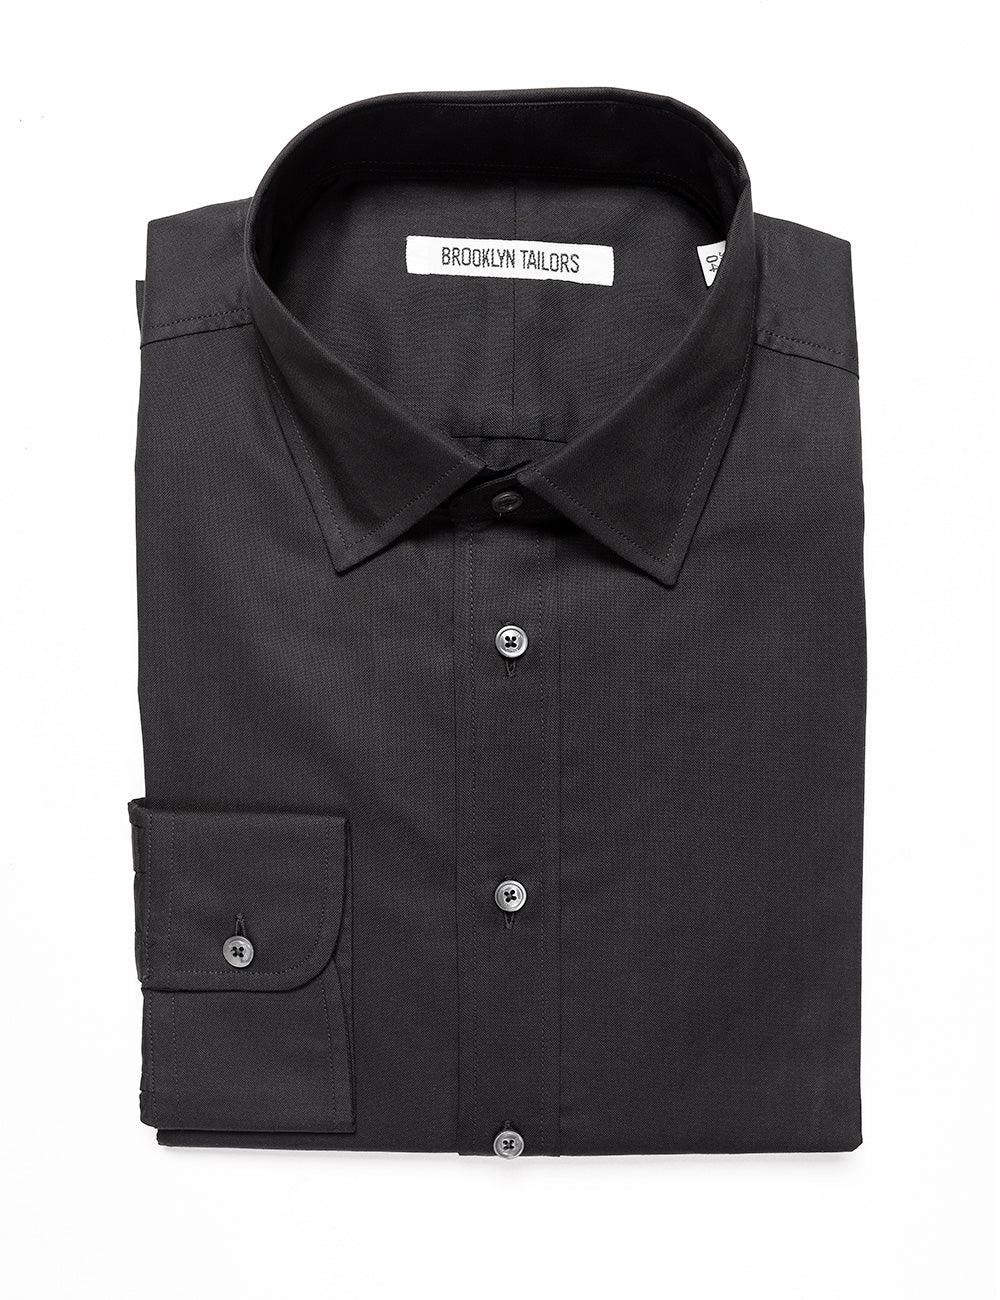 Brooklyn Tailors BKT20 Slim Dress Shirt in Pinpoint Oxford - Black folded flat shot